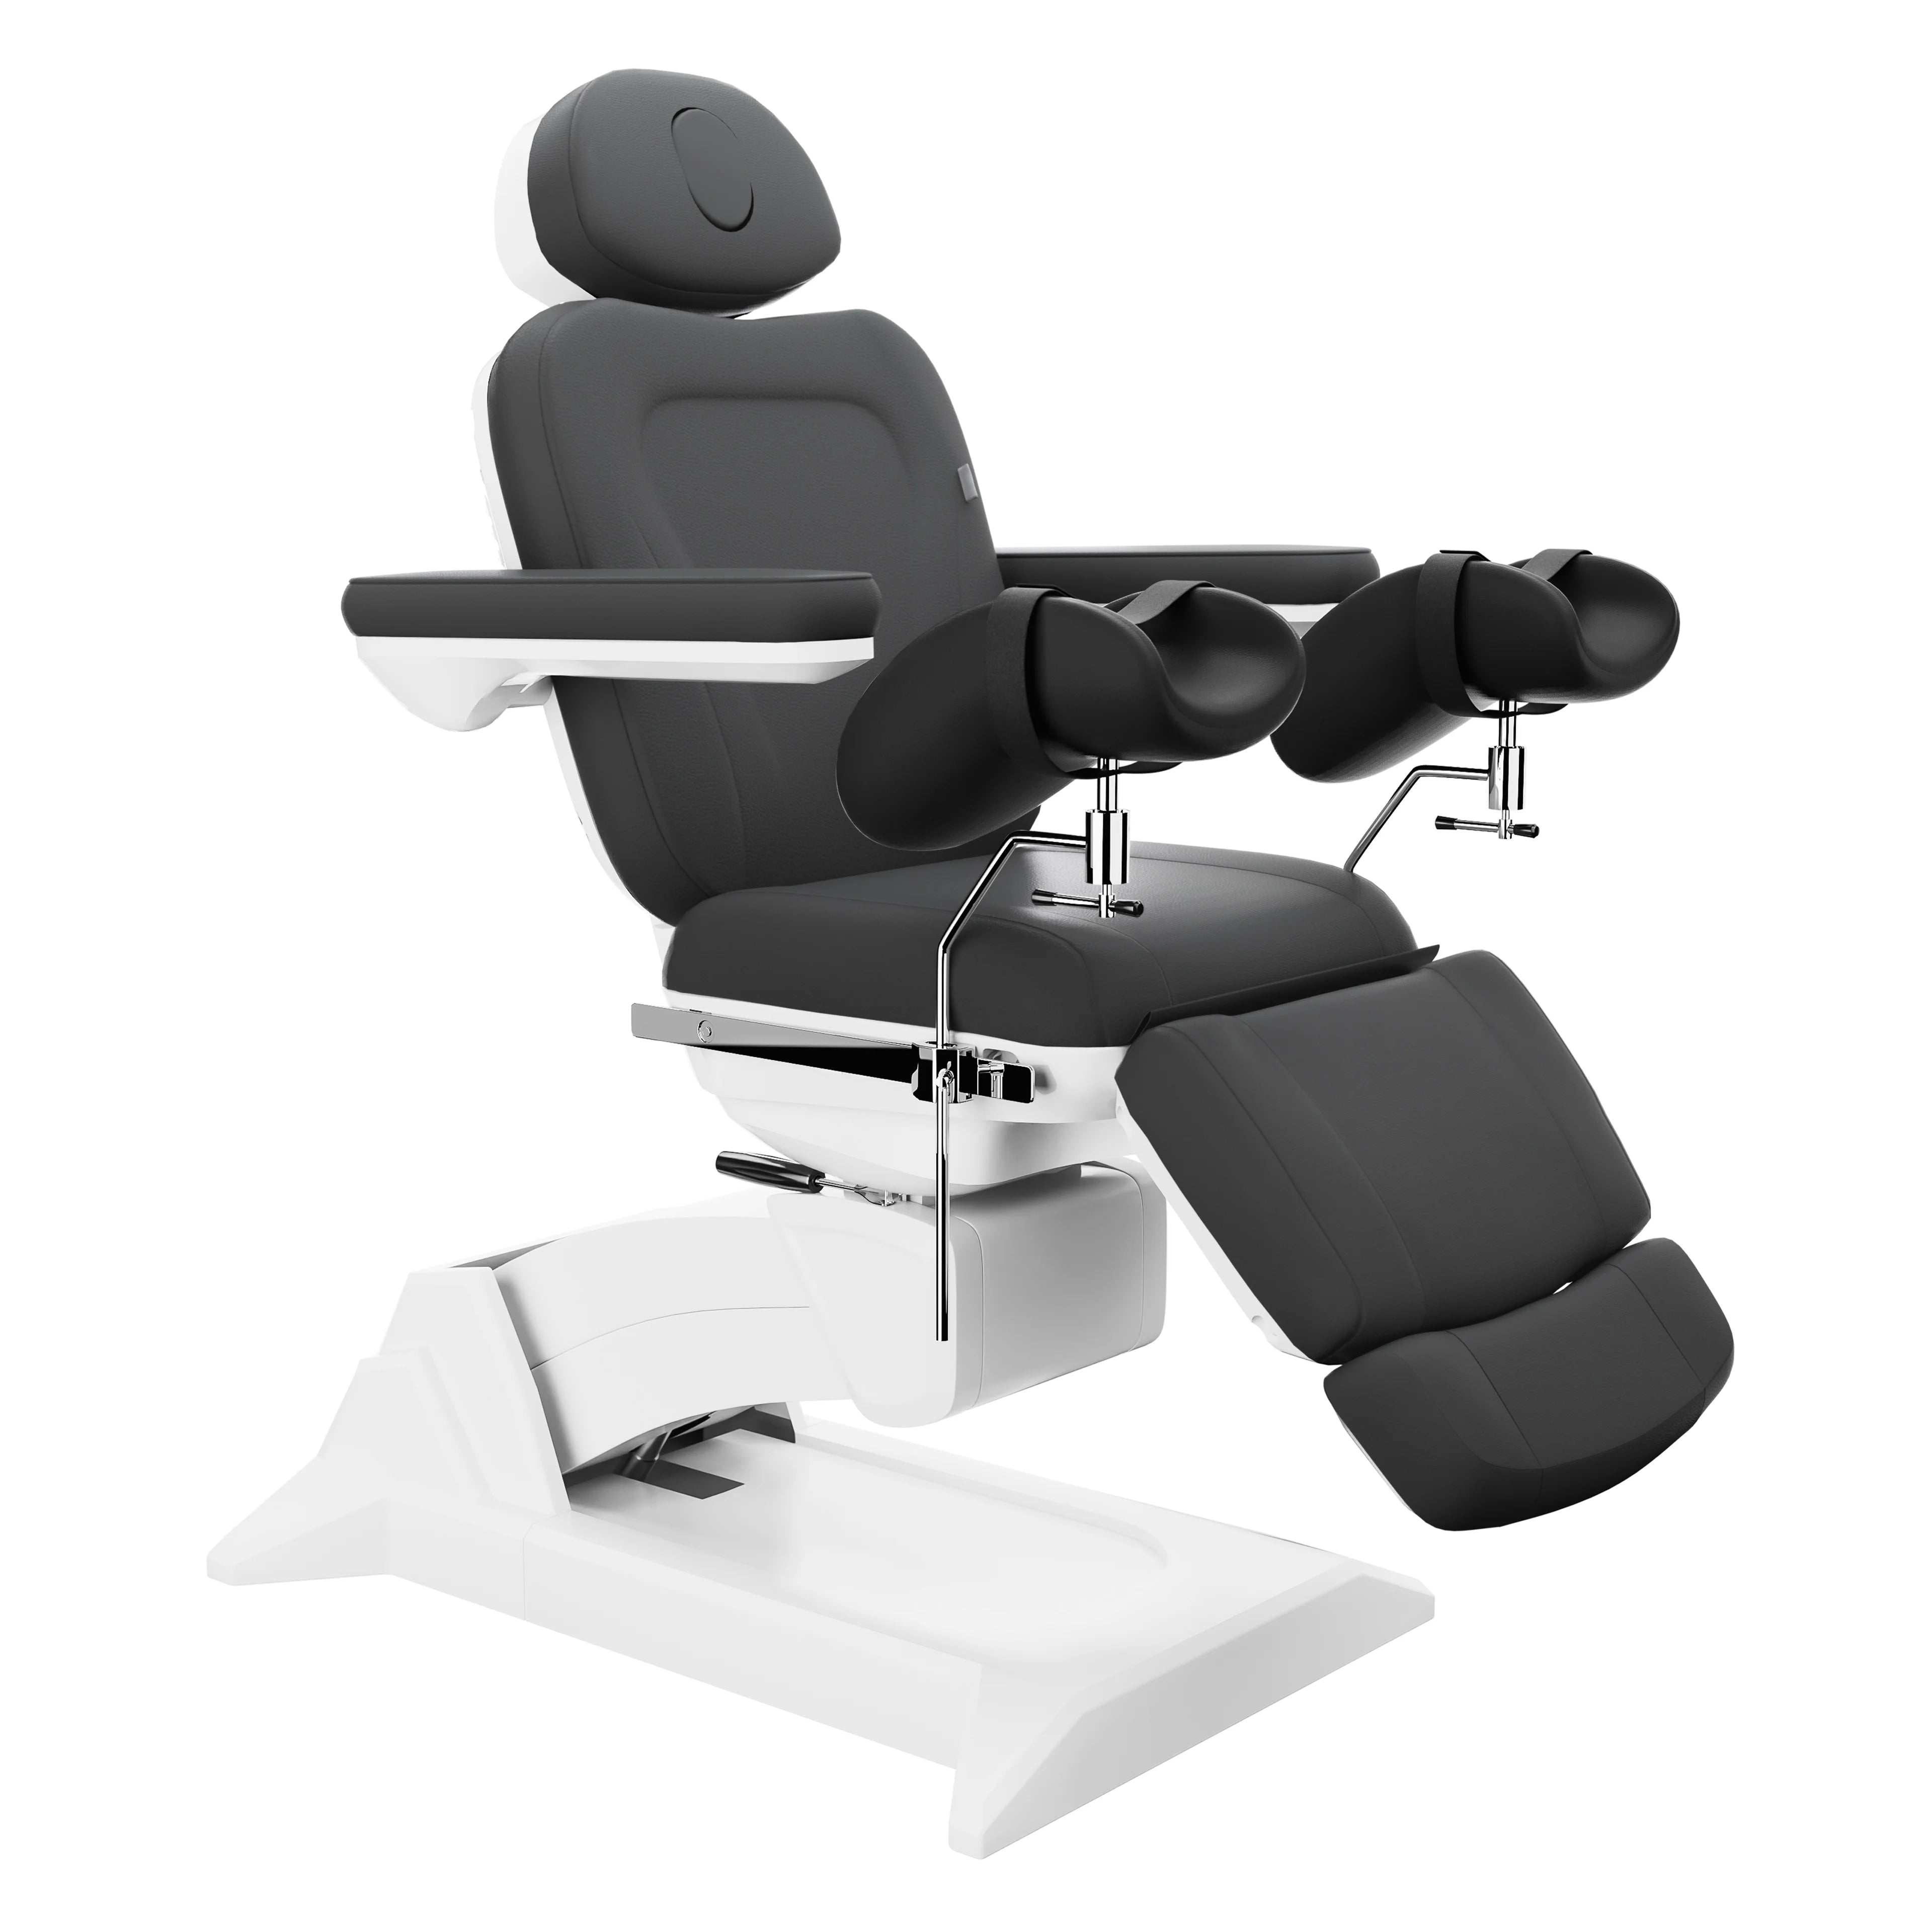 SpaMarc . Ultera (Dark Gray) . OBGYN & Gynecology . Rotating . 4 Motor Spa Treatment Chair/Bed